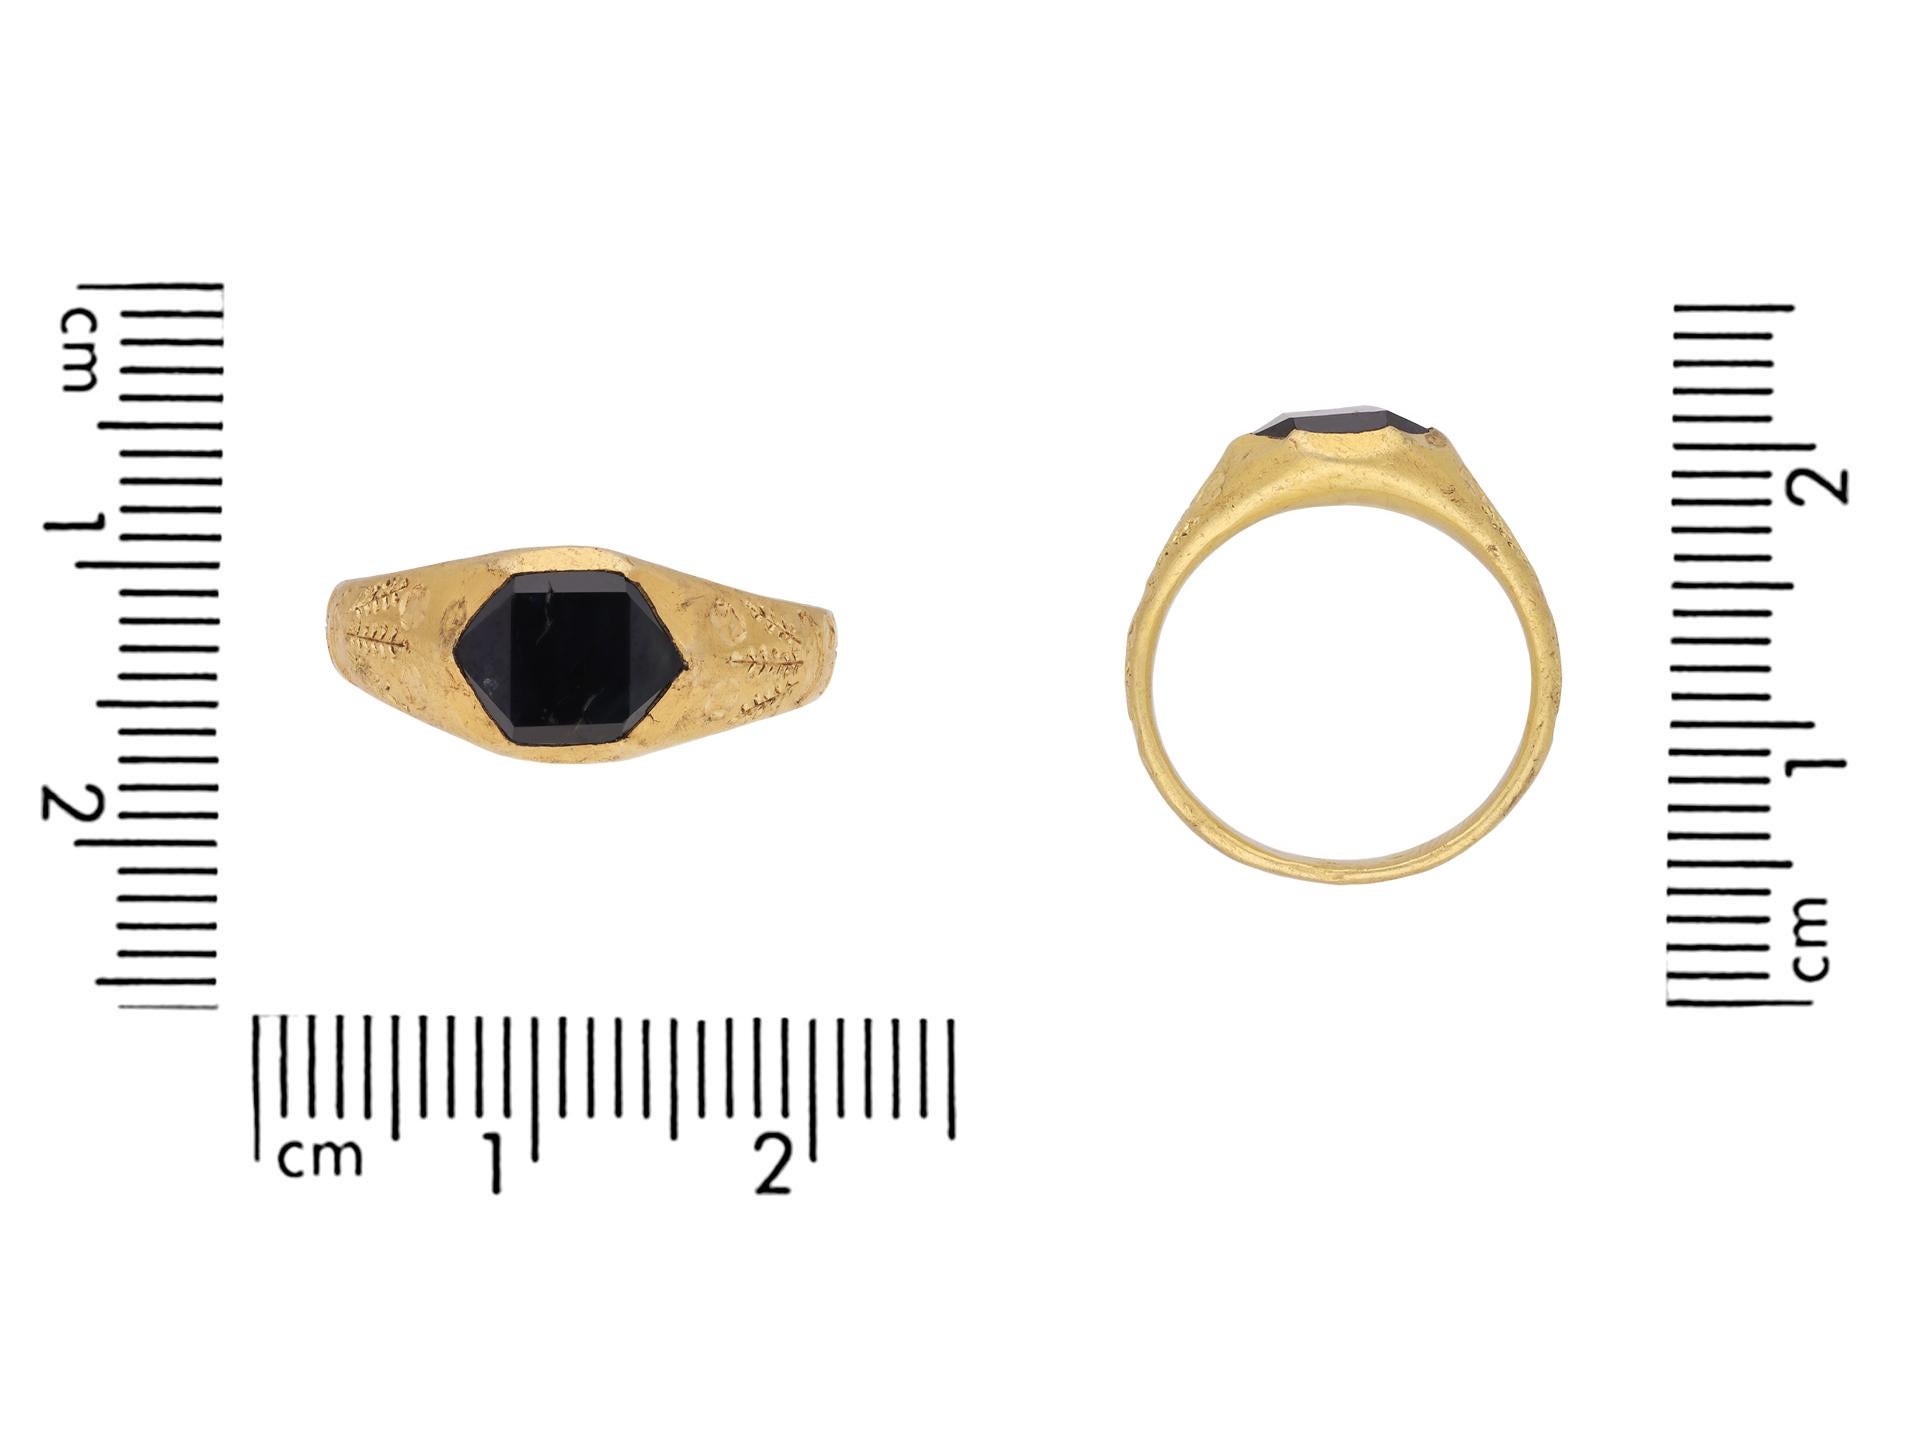 medieval jewelry